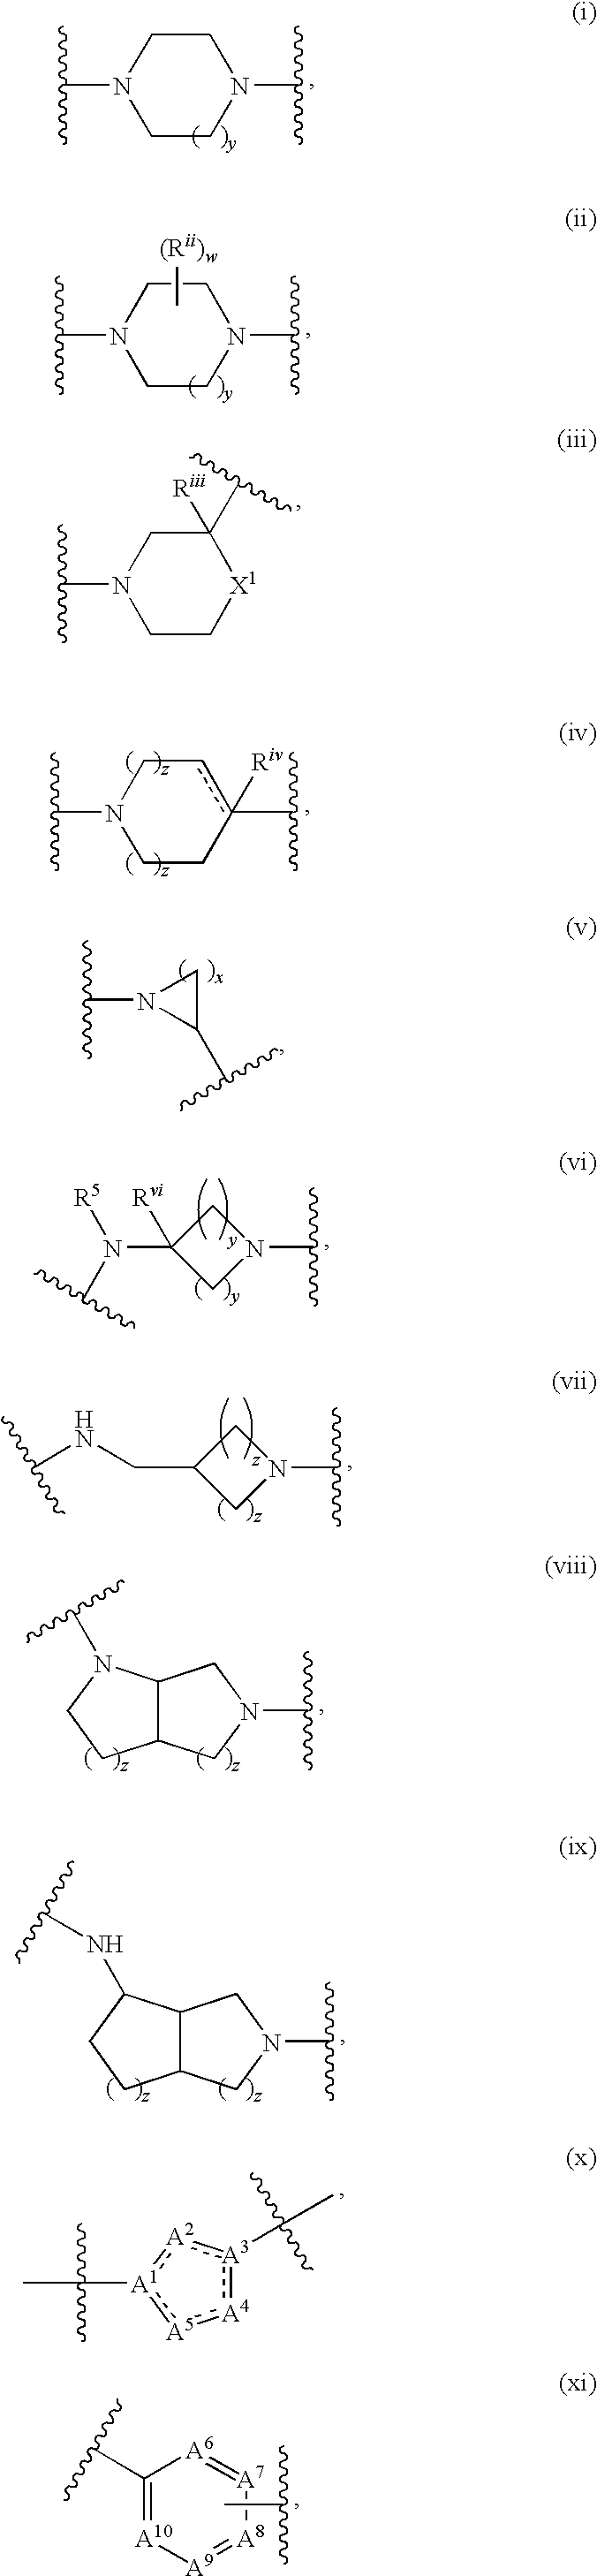 Compounds as calcium channel blockers